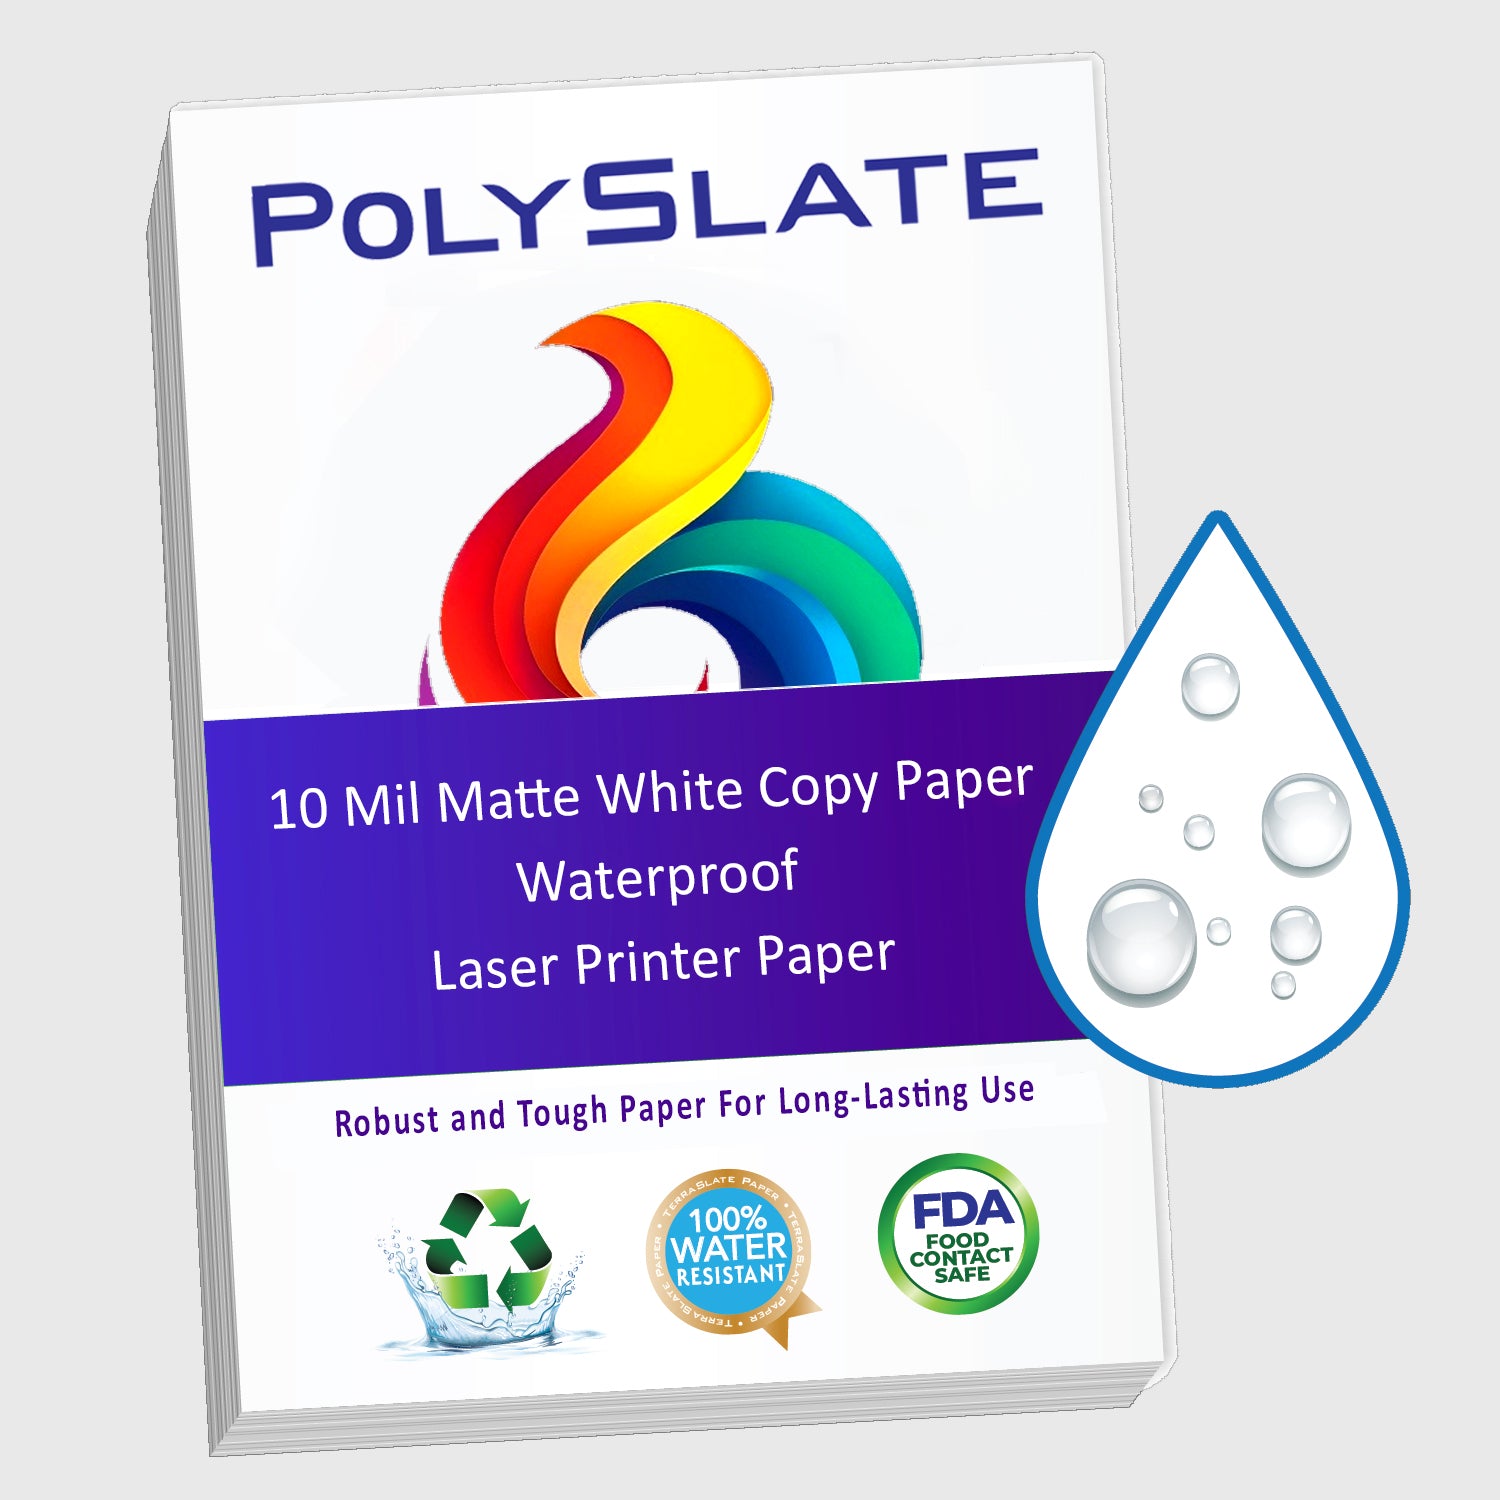 PolySlate Value Waterproof Copy Paper